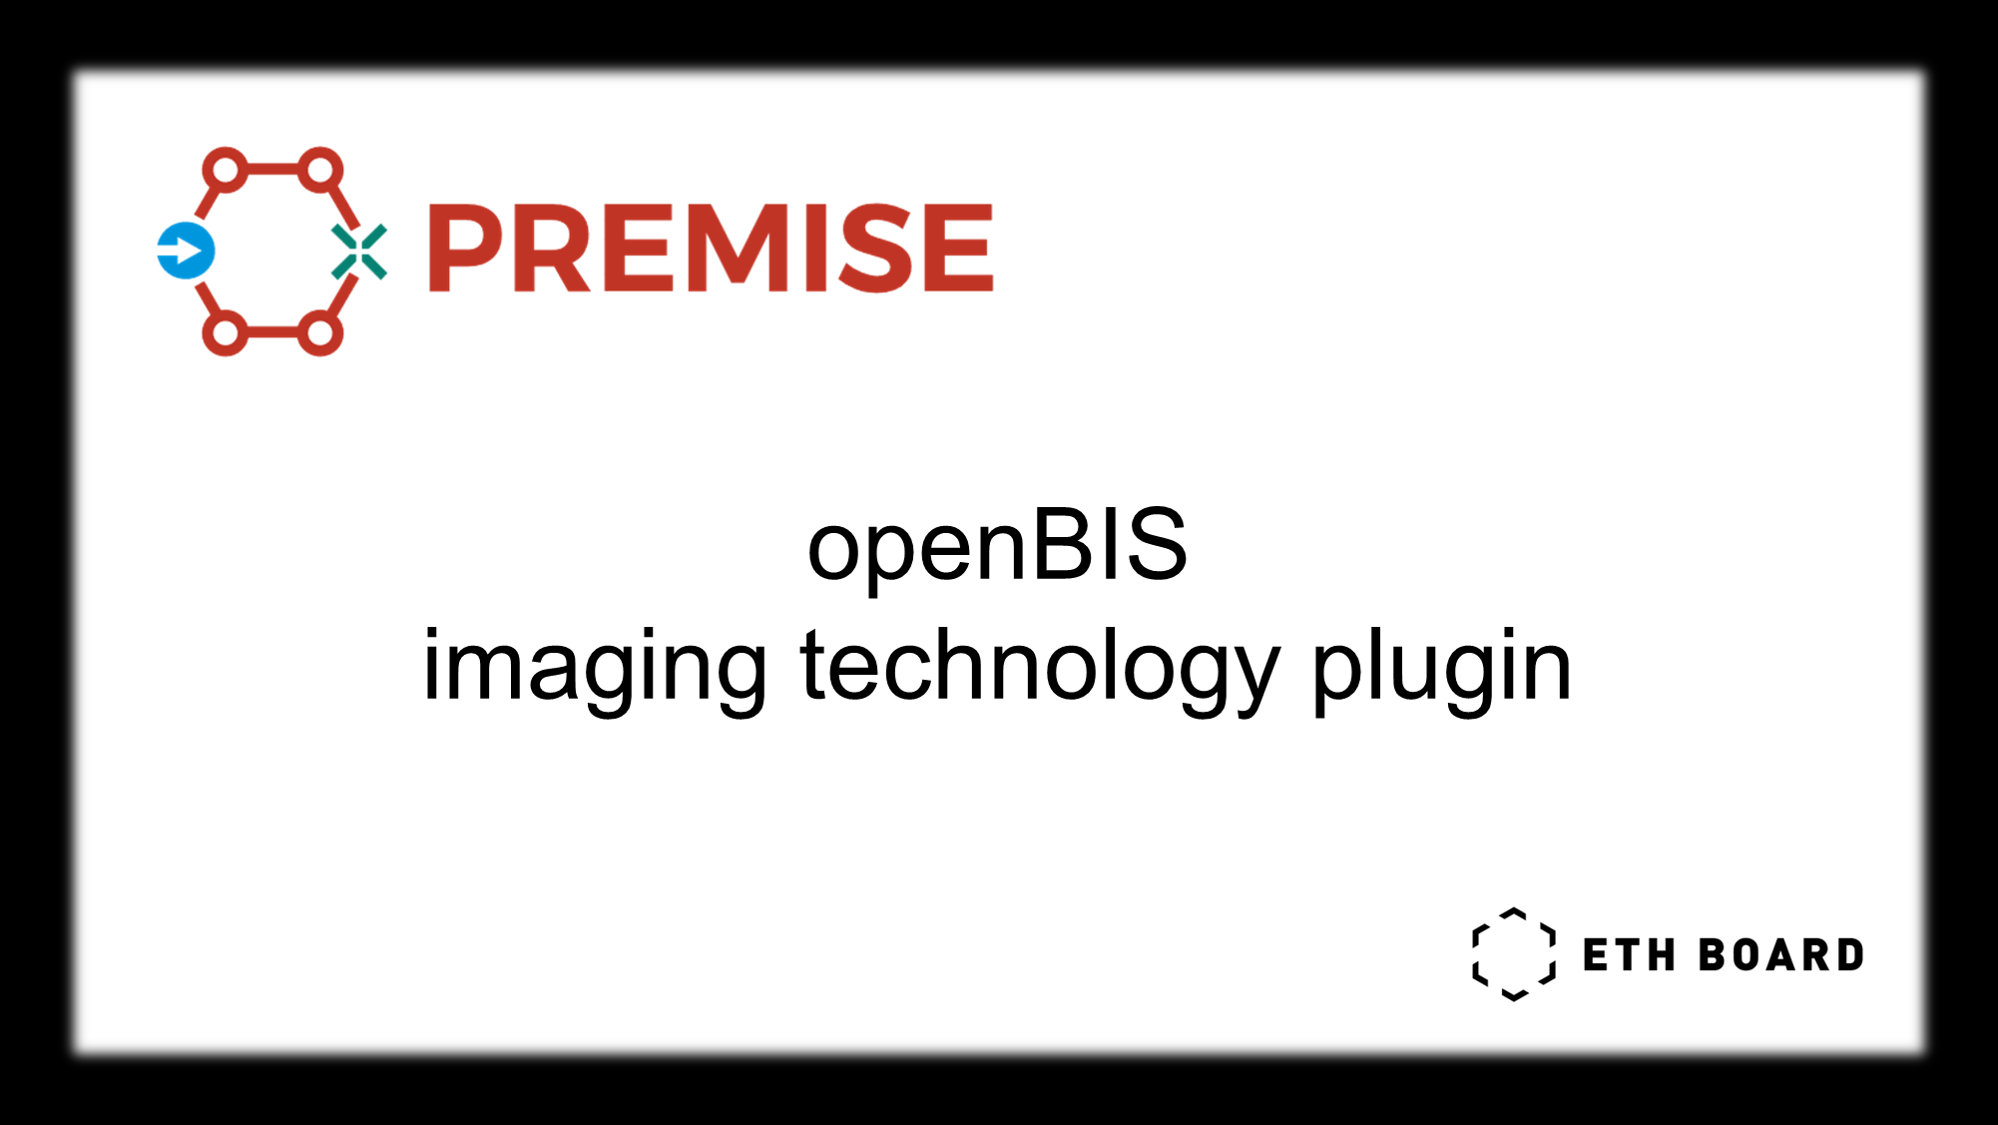 openBIS imaging technology plugin